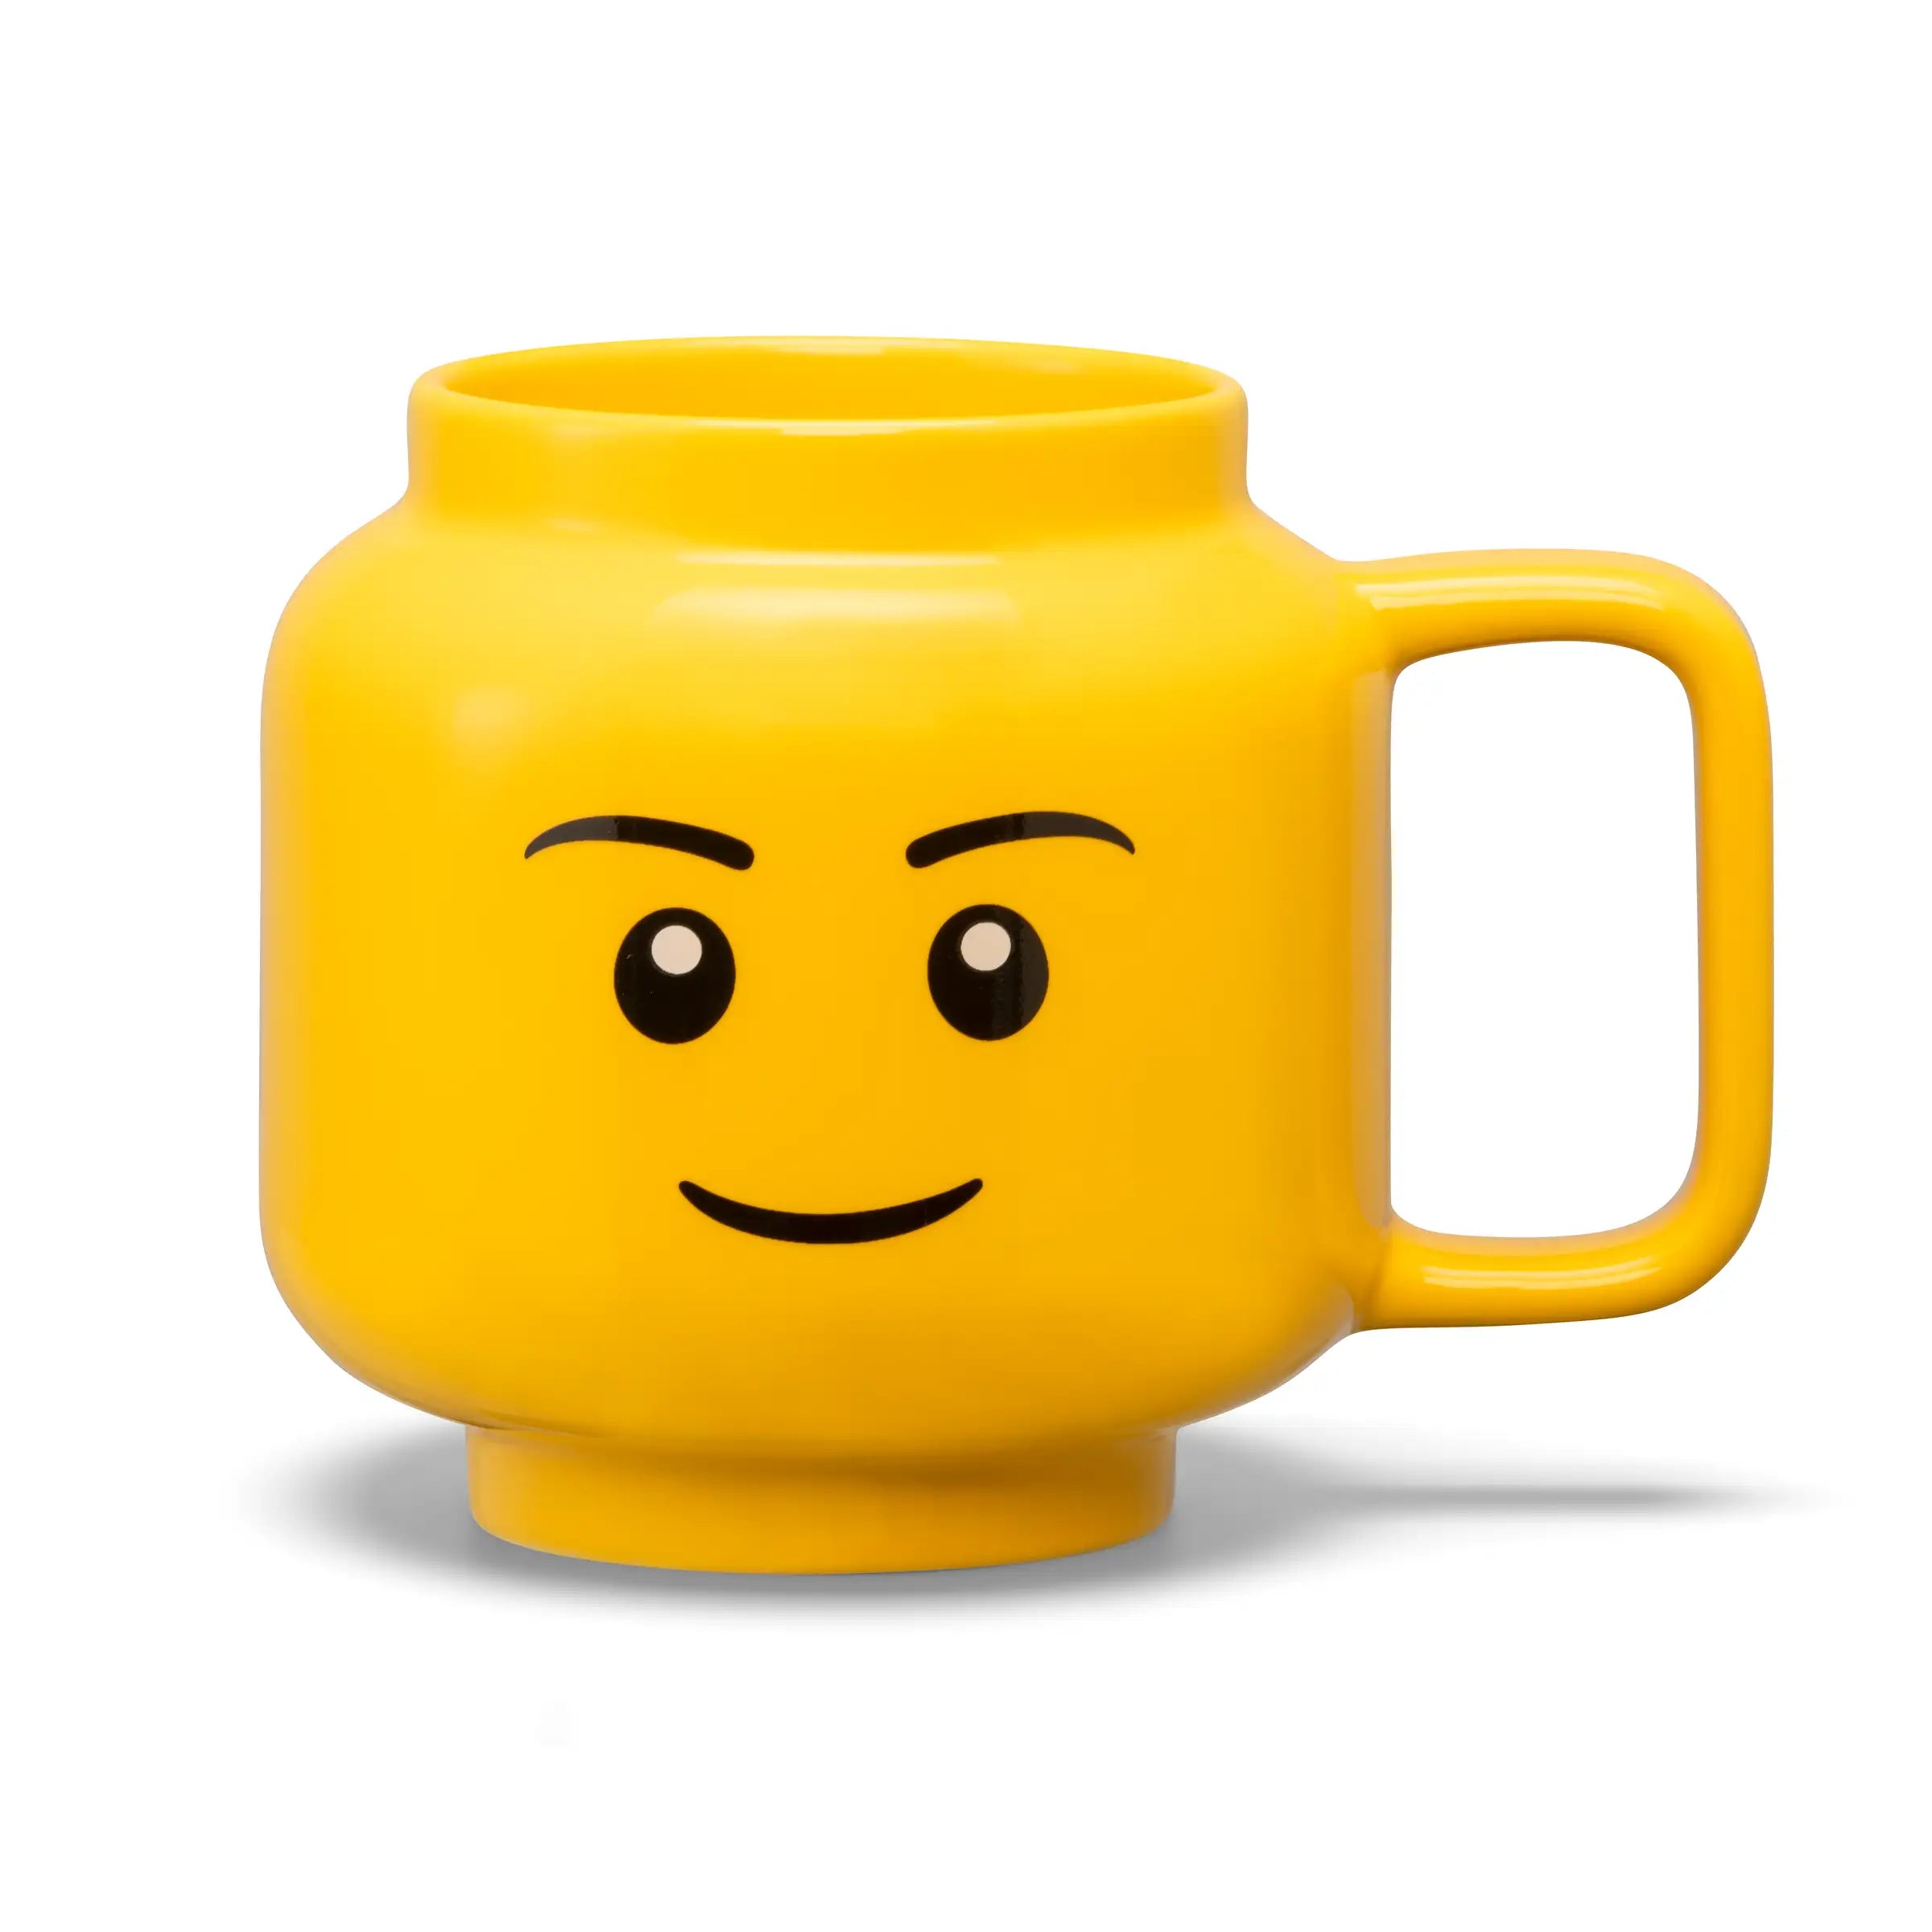 LEGO - taza de cerámica Boy Grande